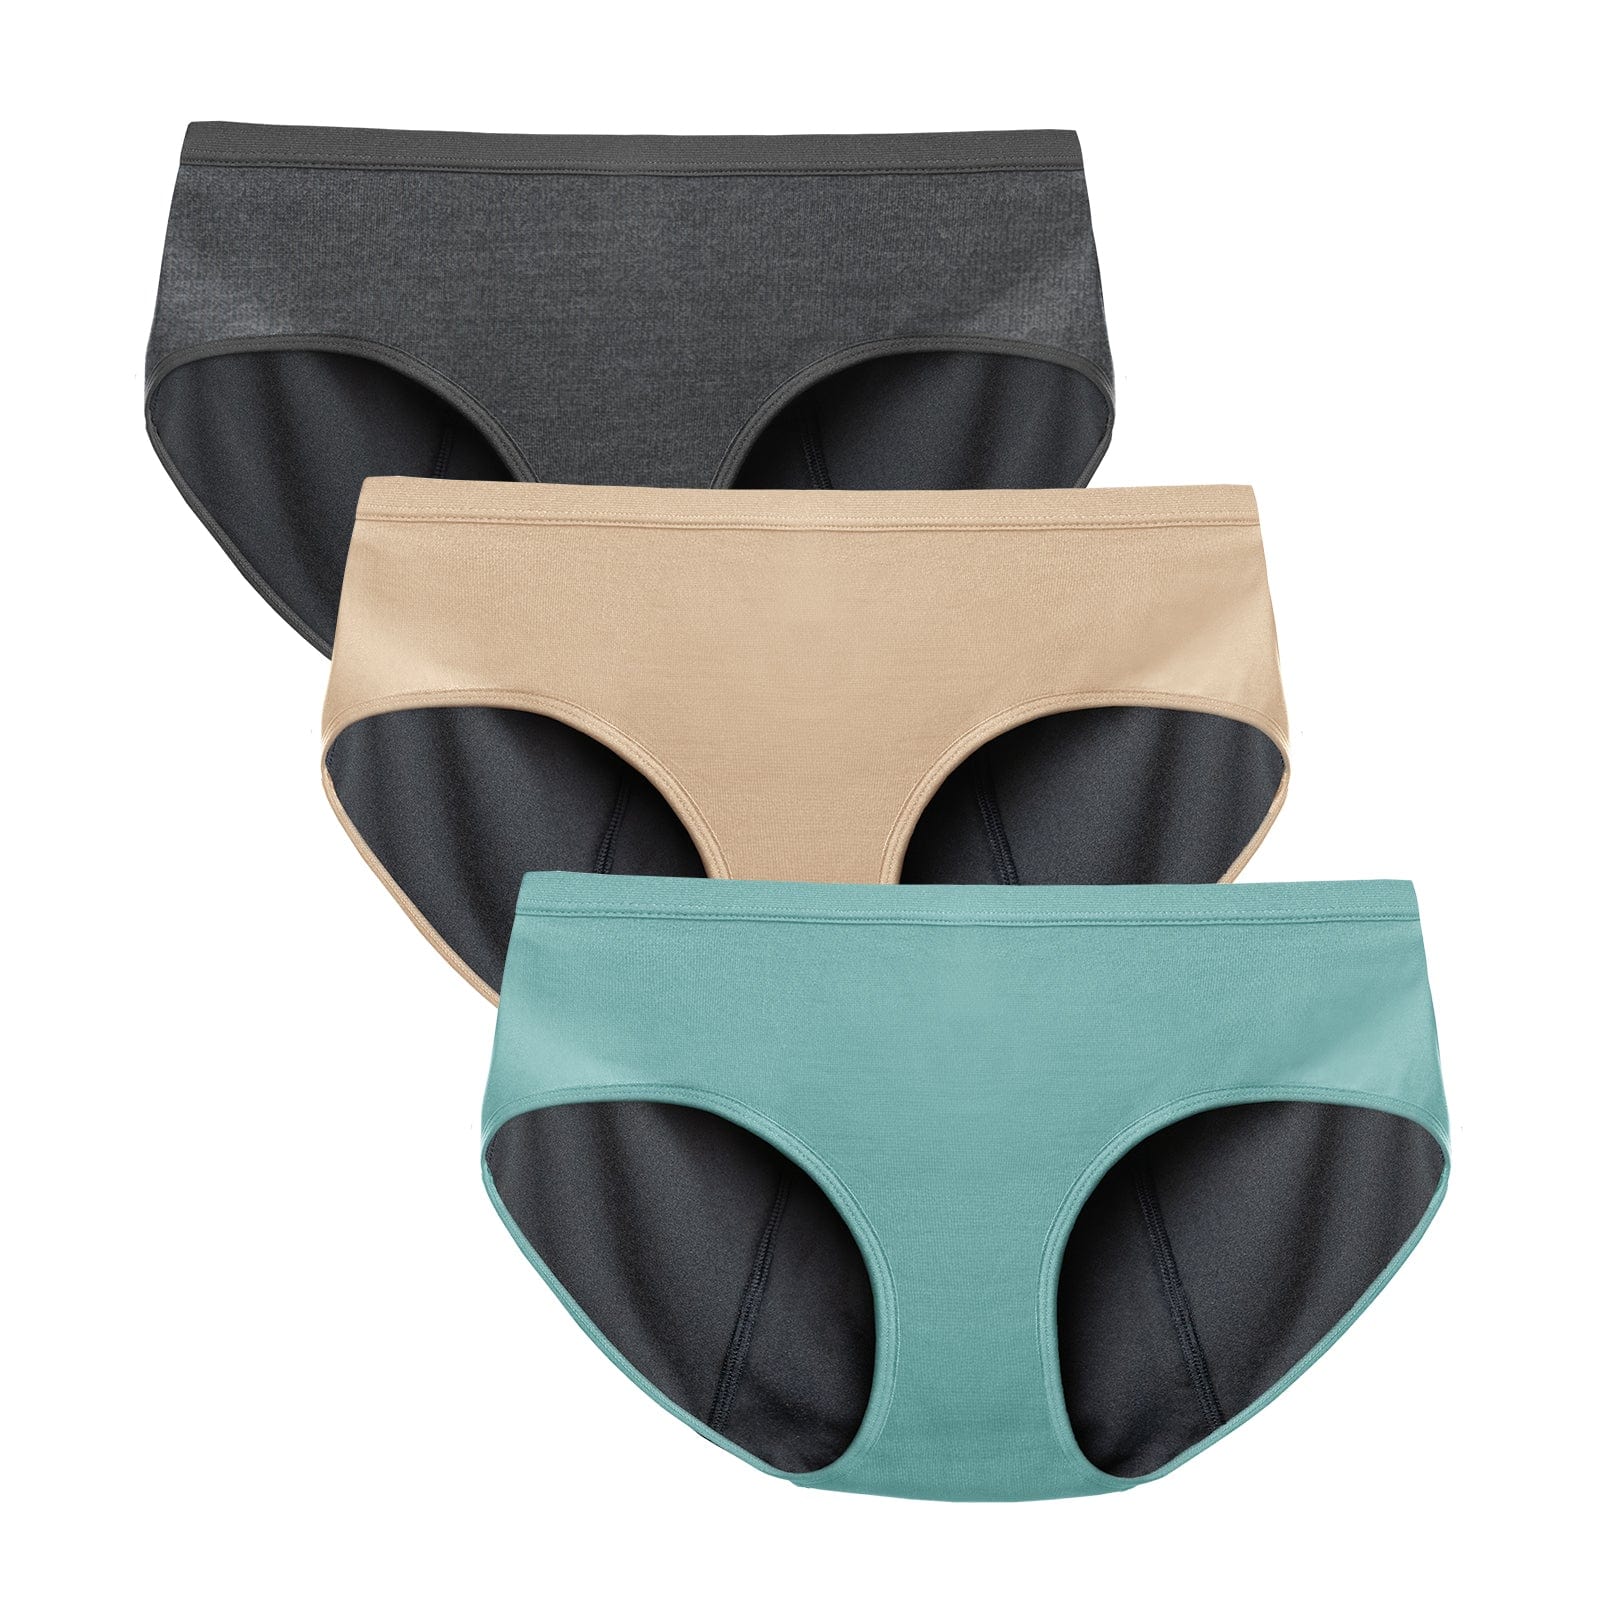  TIICHOO Period Underwear Heavy Flow Soft Period Panties  Teens Leak Proof Menstrual Underwear Incontinence 3 Pack